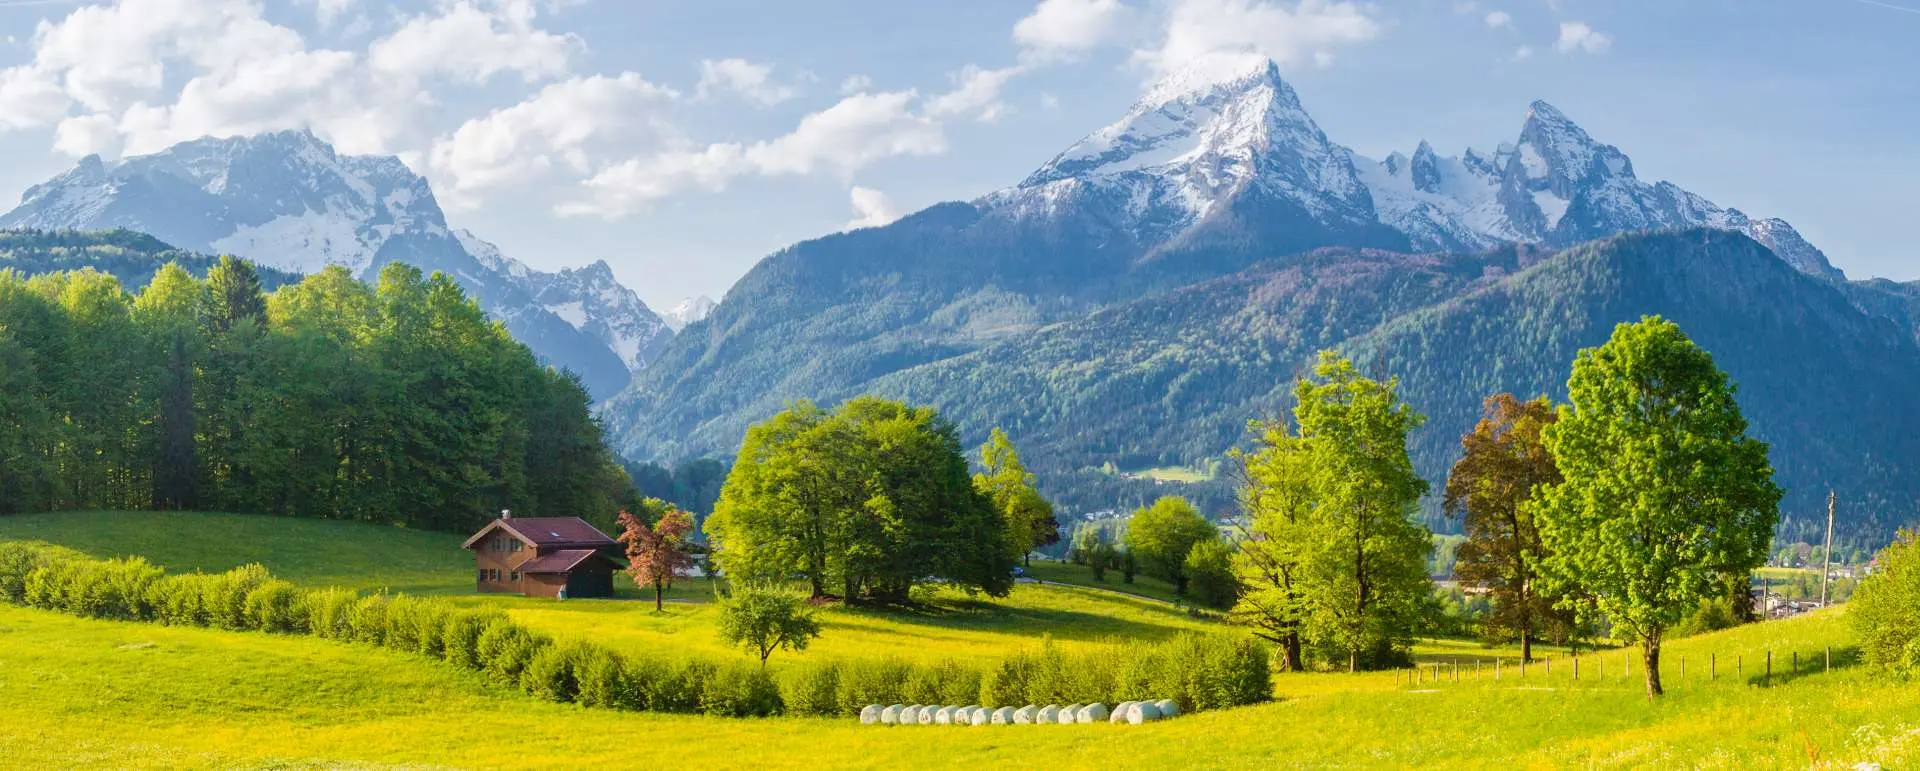 Berchtesgadener Land - Exclusive locations for corporate retreats